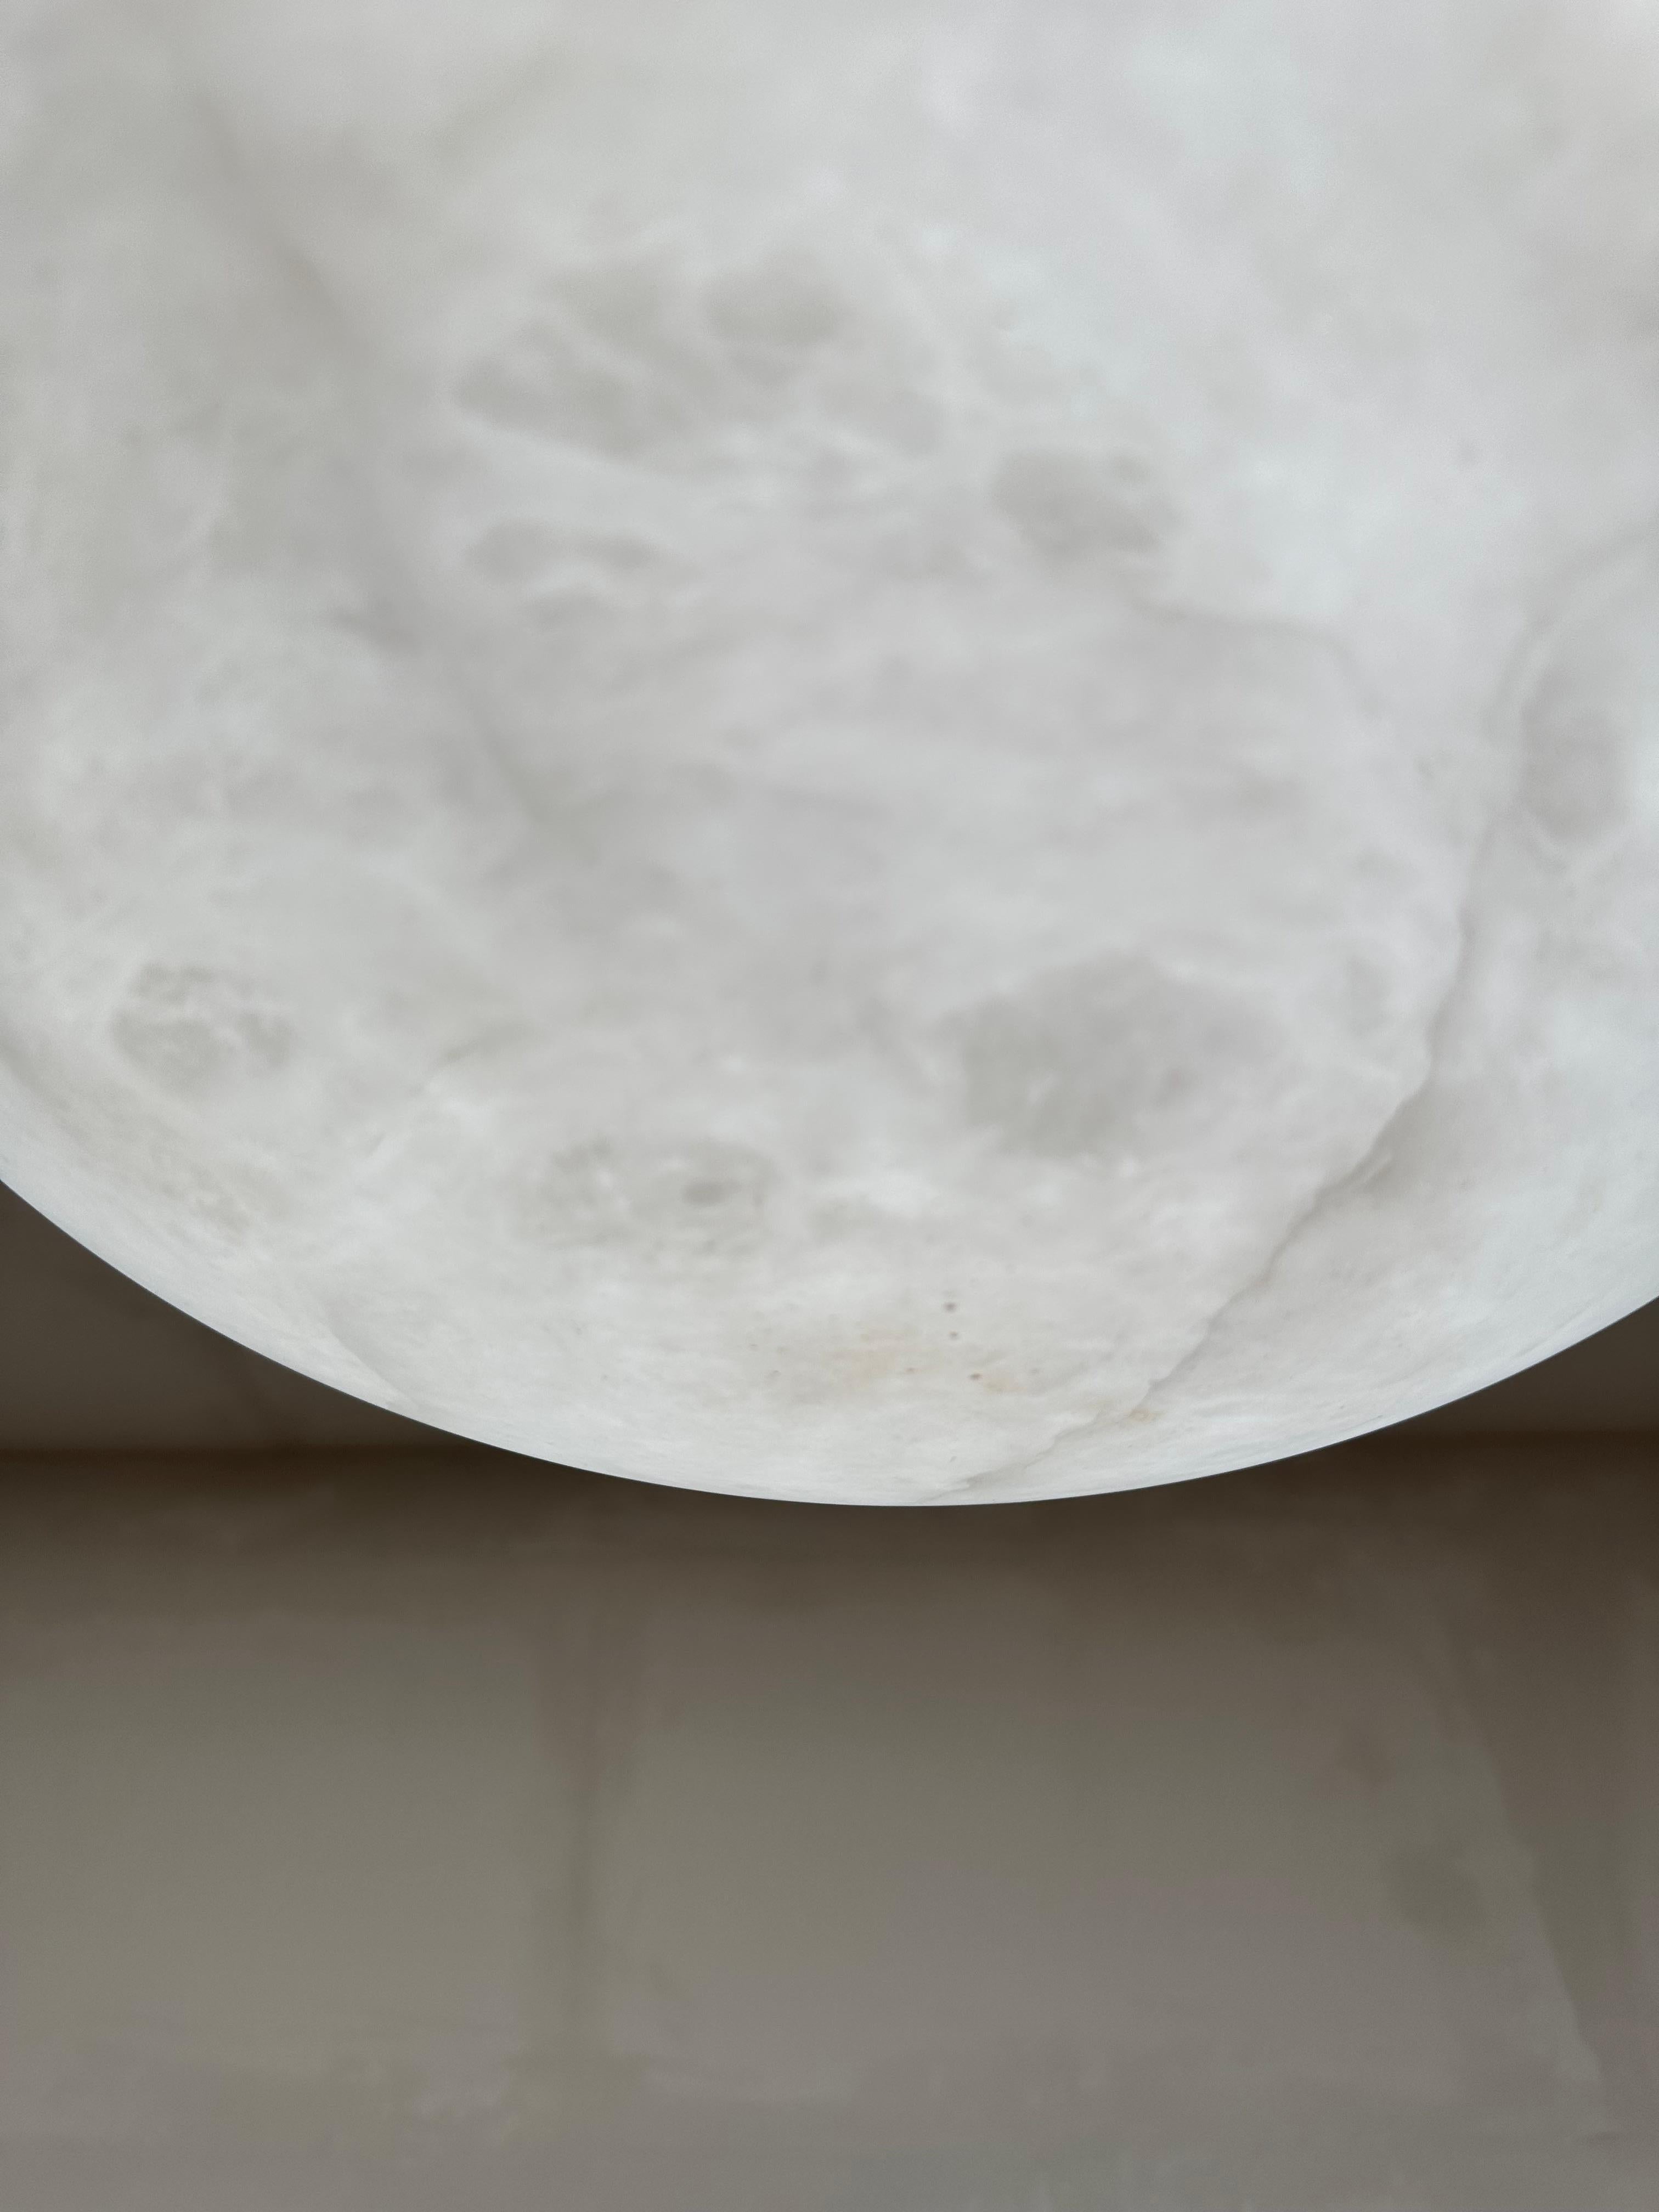 moon ceiling light shade